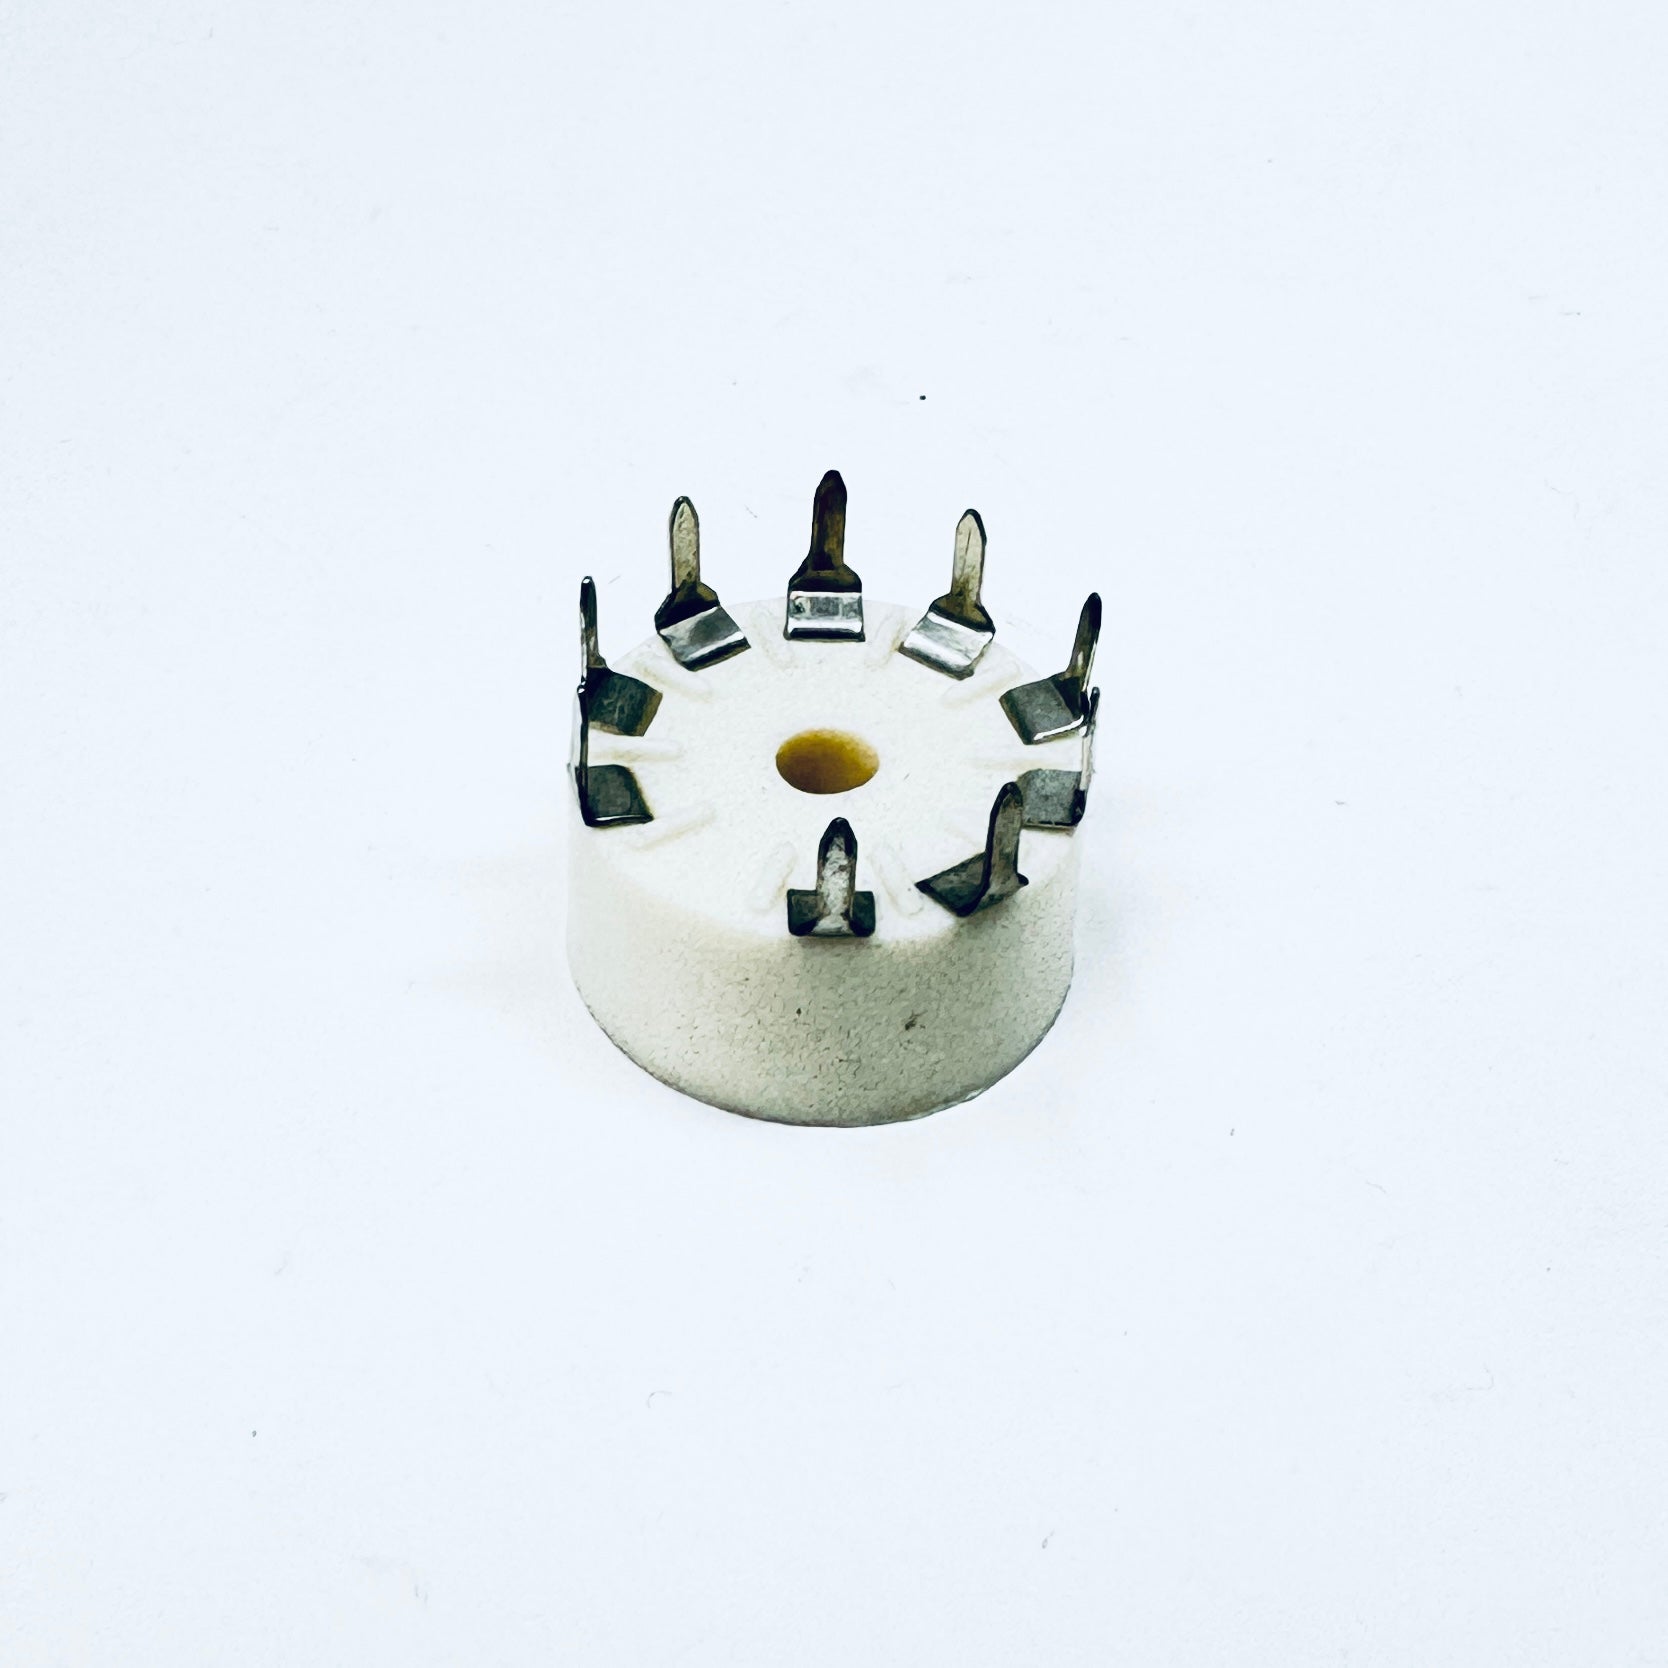 Ceramic 9 Pin PC Mount Phenolic Socket - TUS9PC1, ceramic socket, 